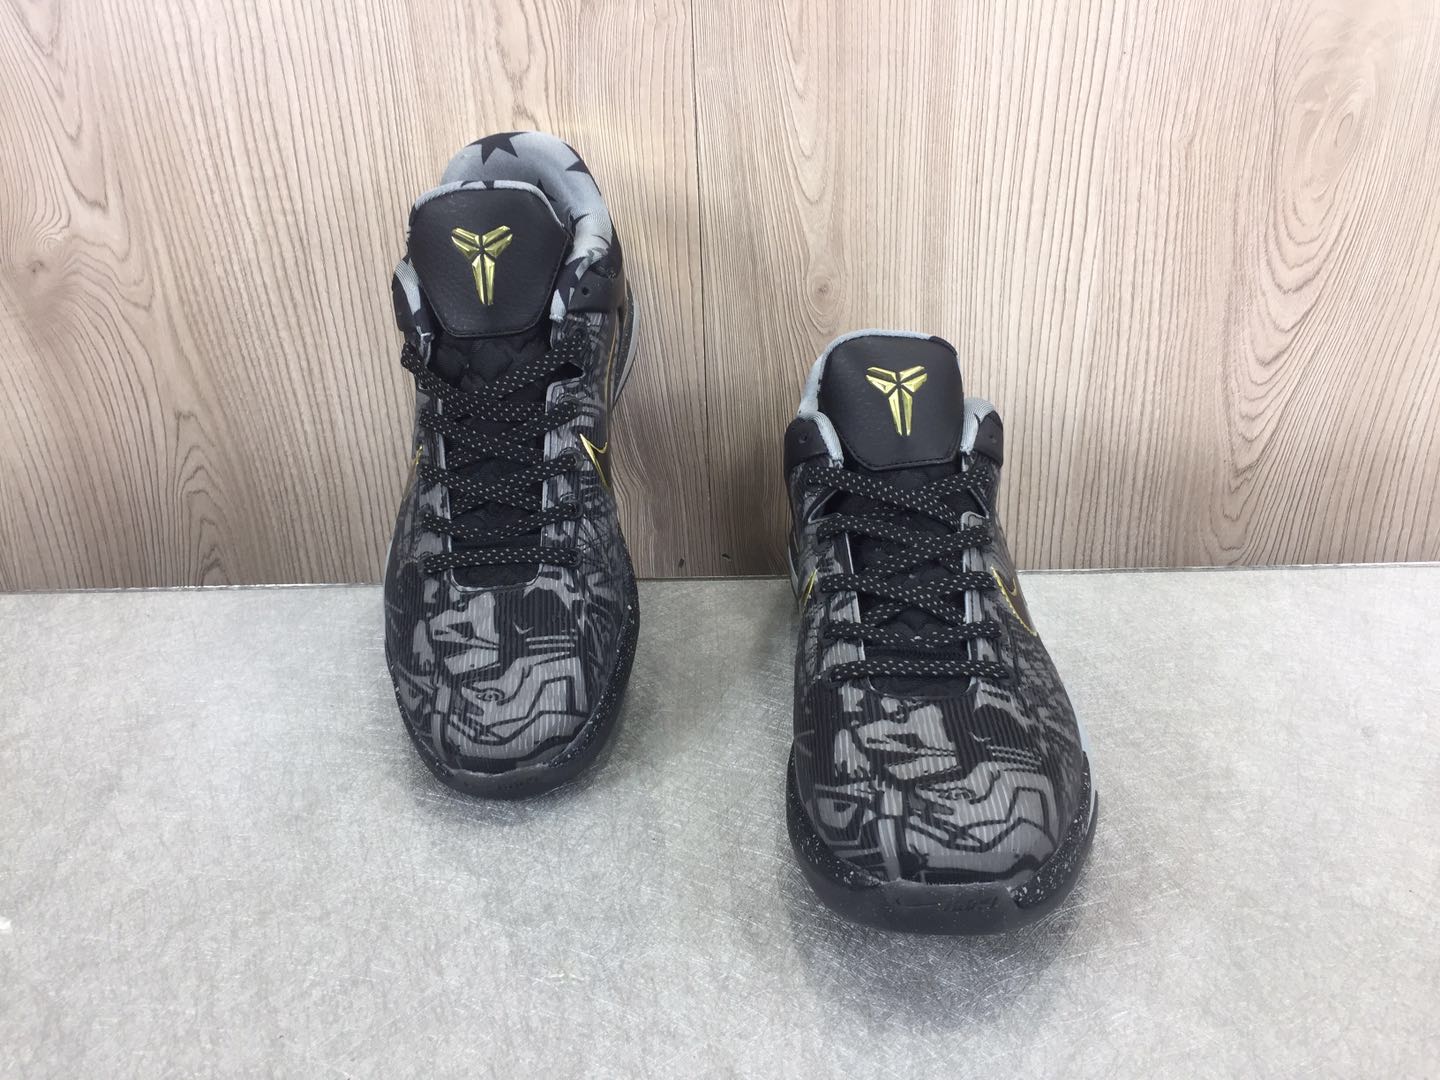 New Nike Kobe Bryant VII BHM Shoes - Click Image to Close